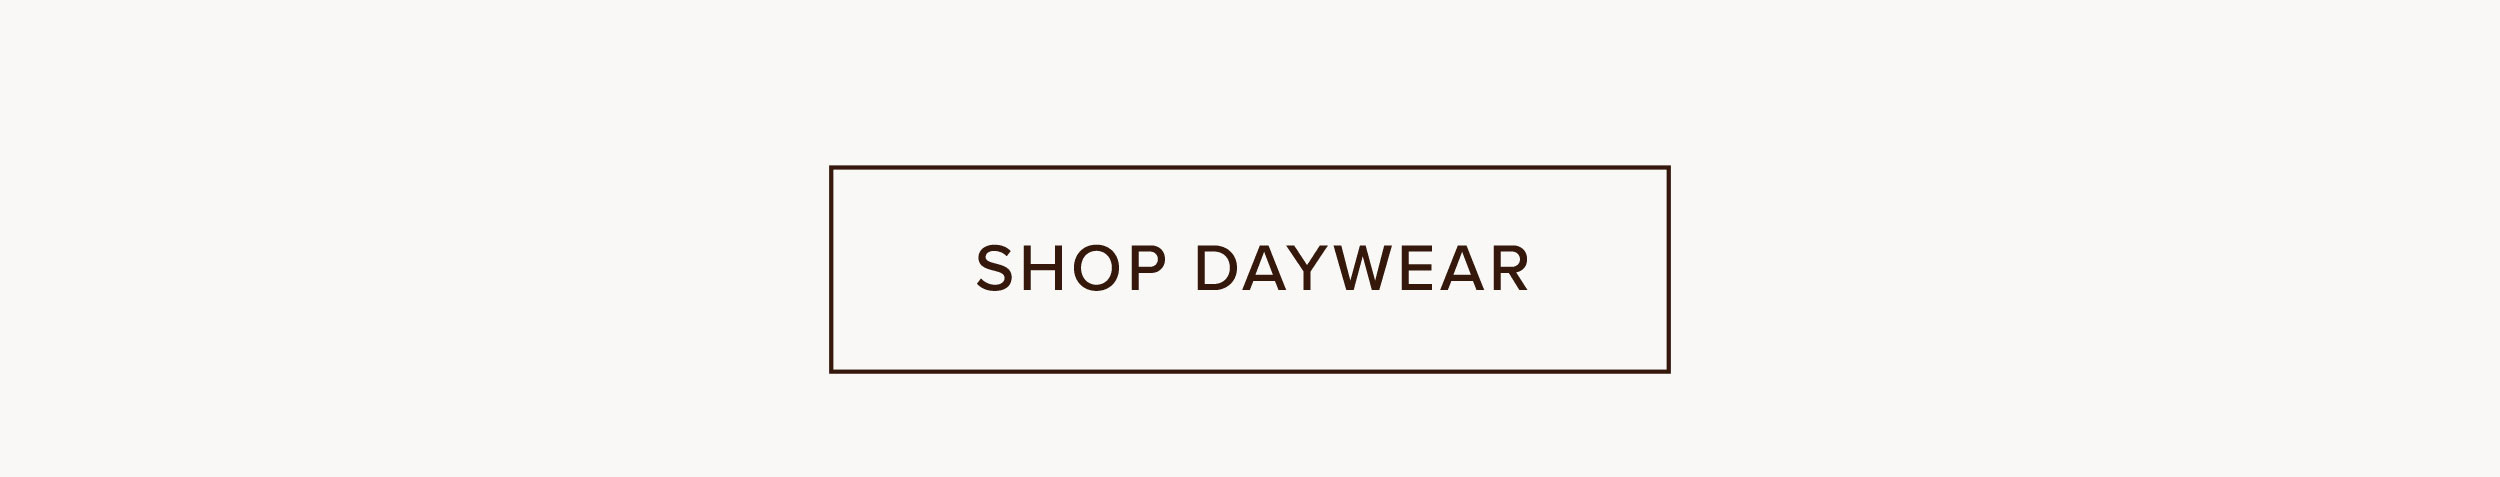 Shop daywear